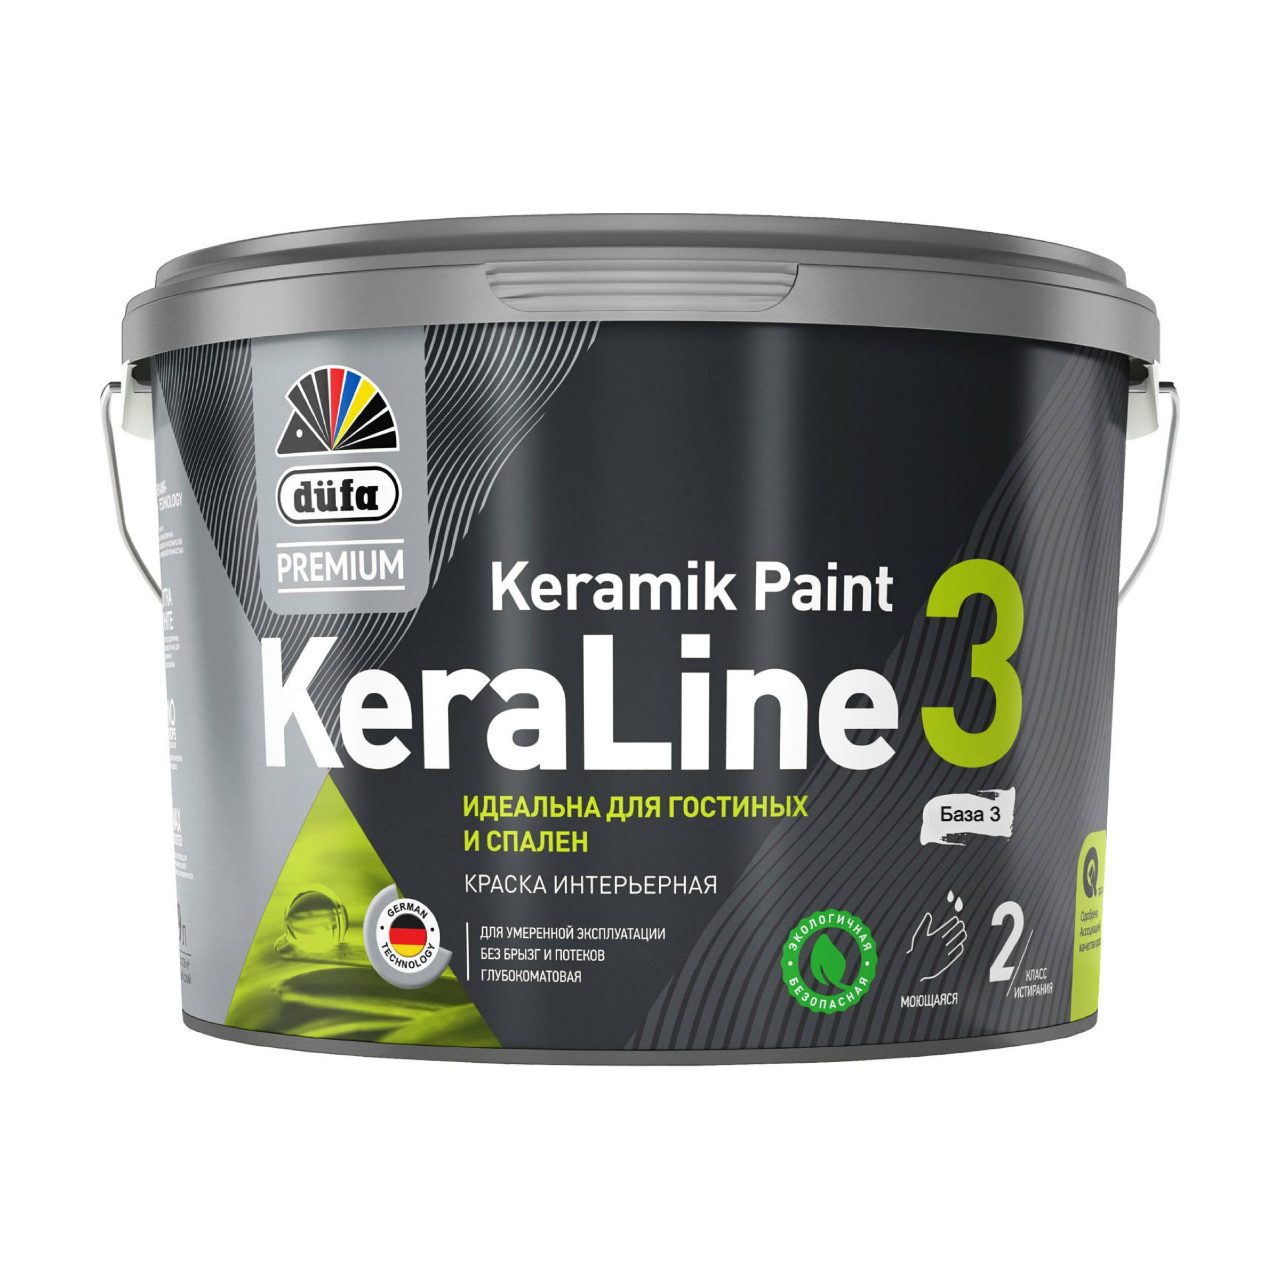 90190610 Краска для стен и потолков Premium KeraLine Keramik Paint 3 глубокоматовая белая база 1 9 л STLM-0126761 DUFA